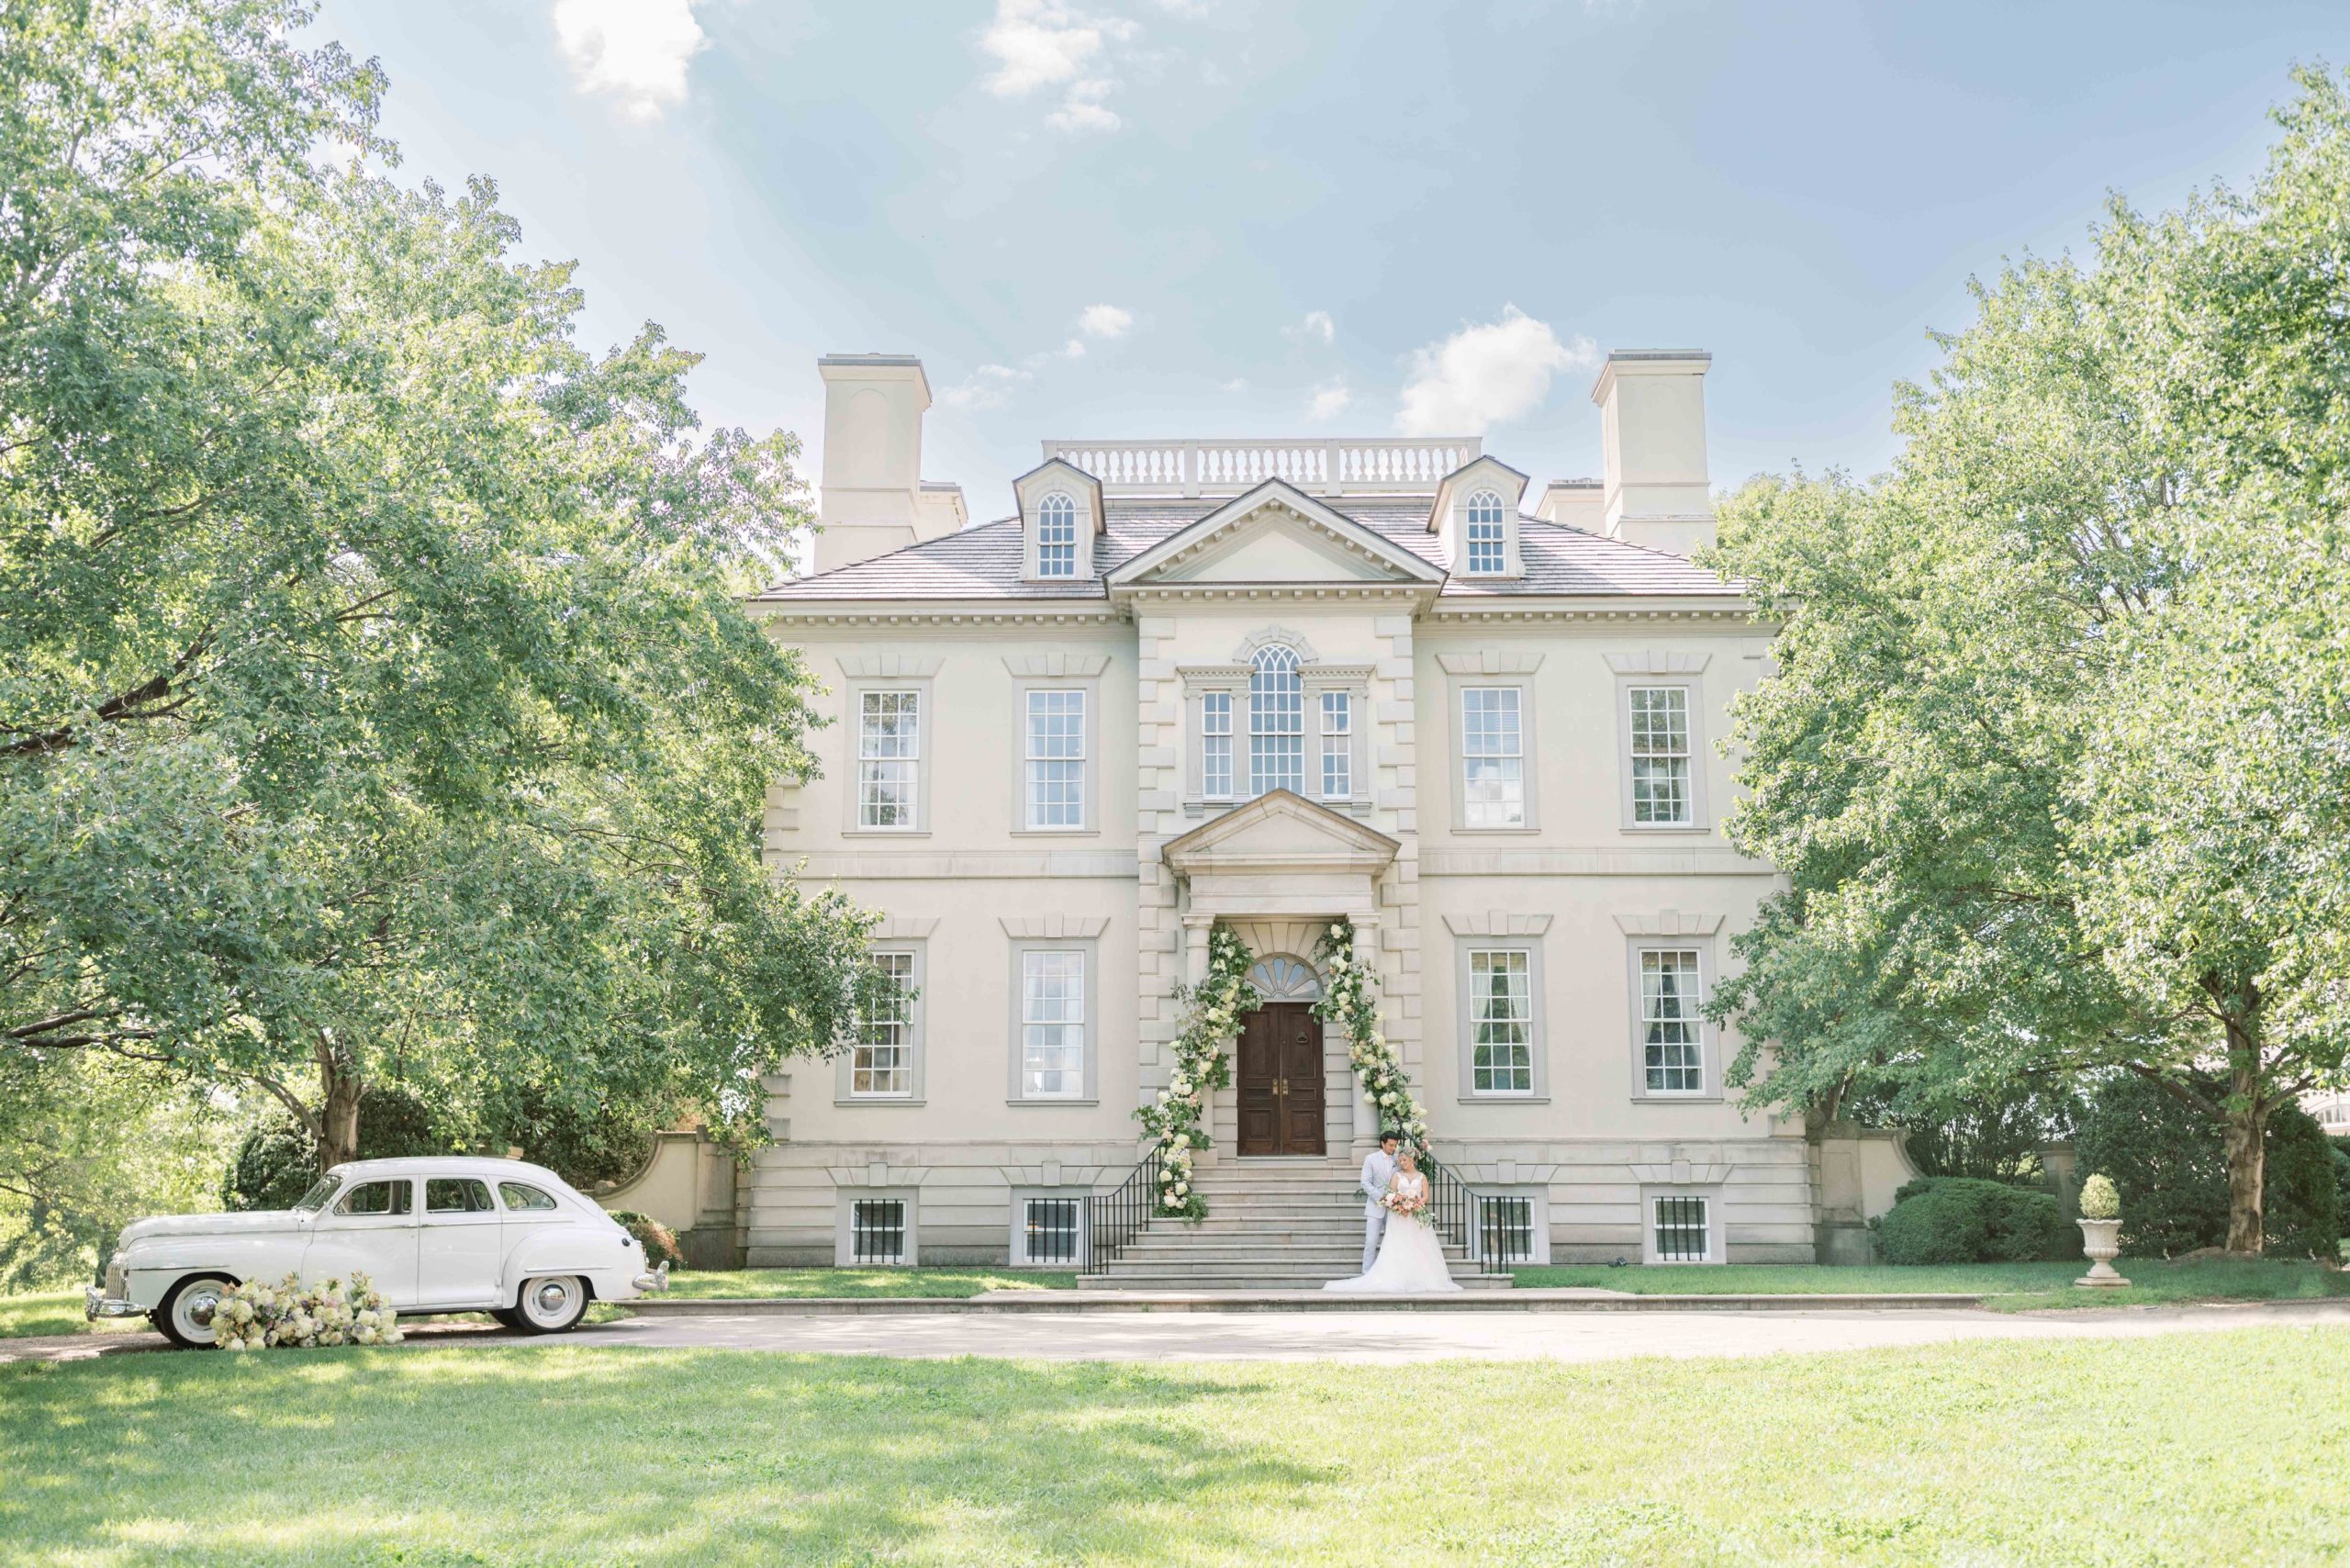 Stunning and romantic wedding portraits at Great Marsh Estate in Bealeton, VA.